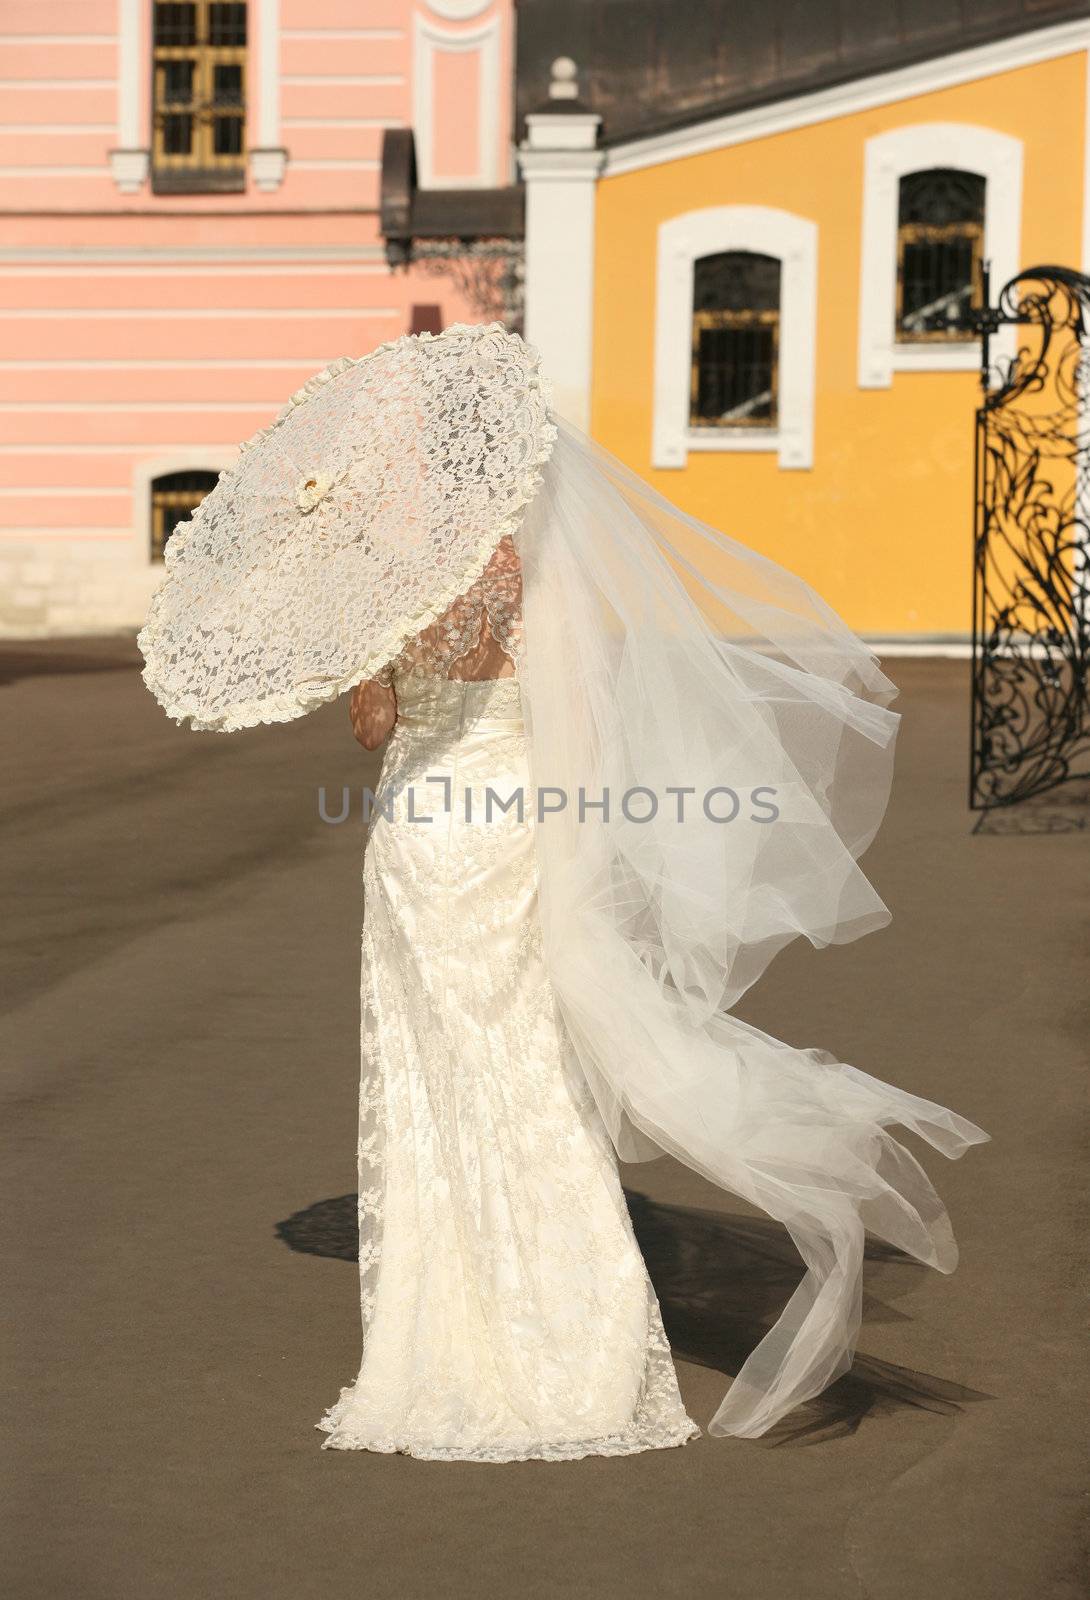 The bride with a umbrella in a sunny day